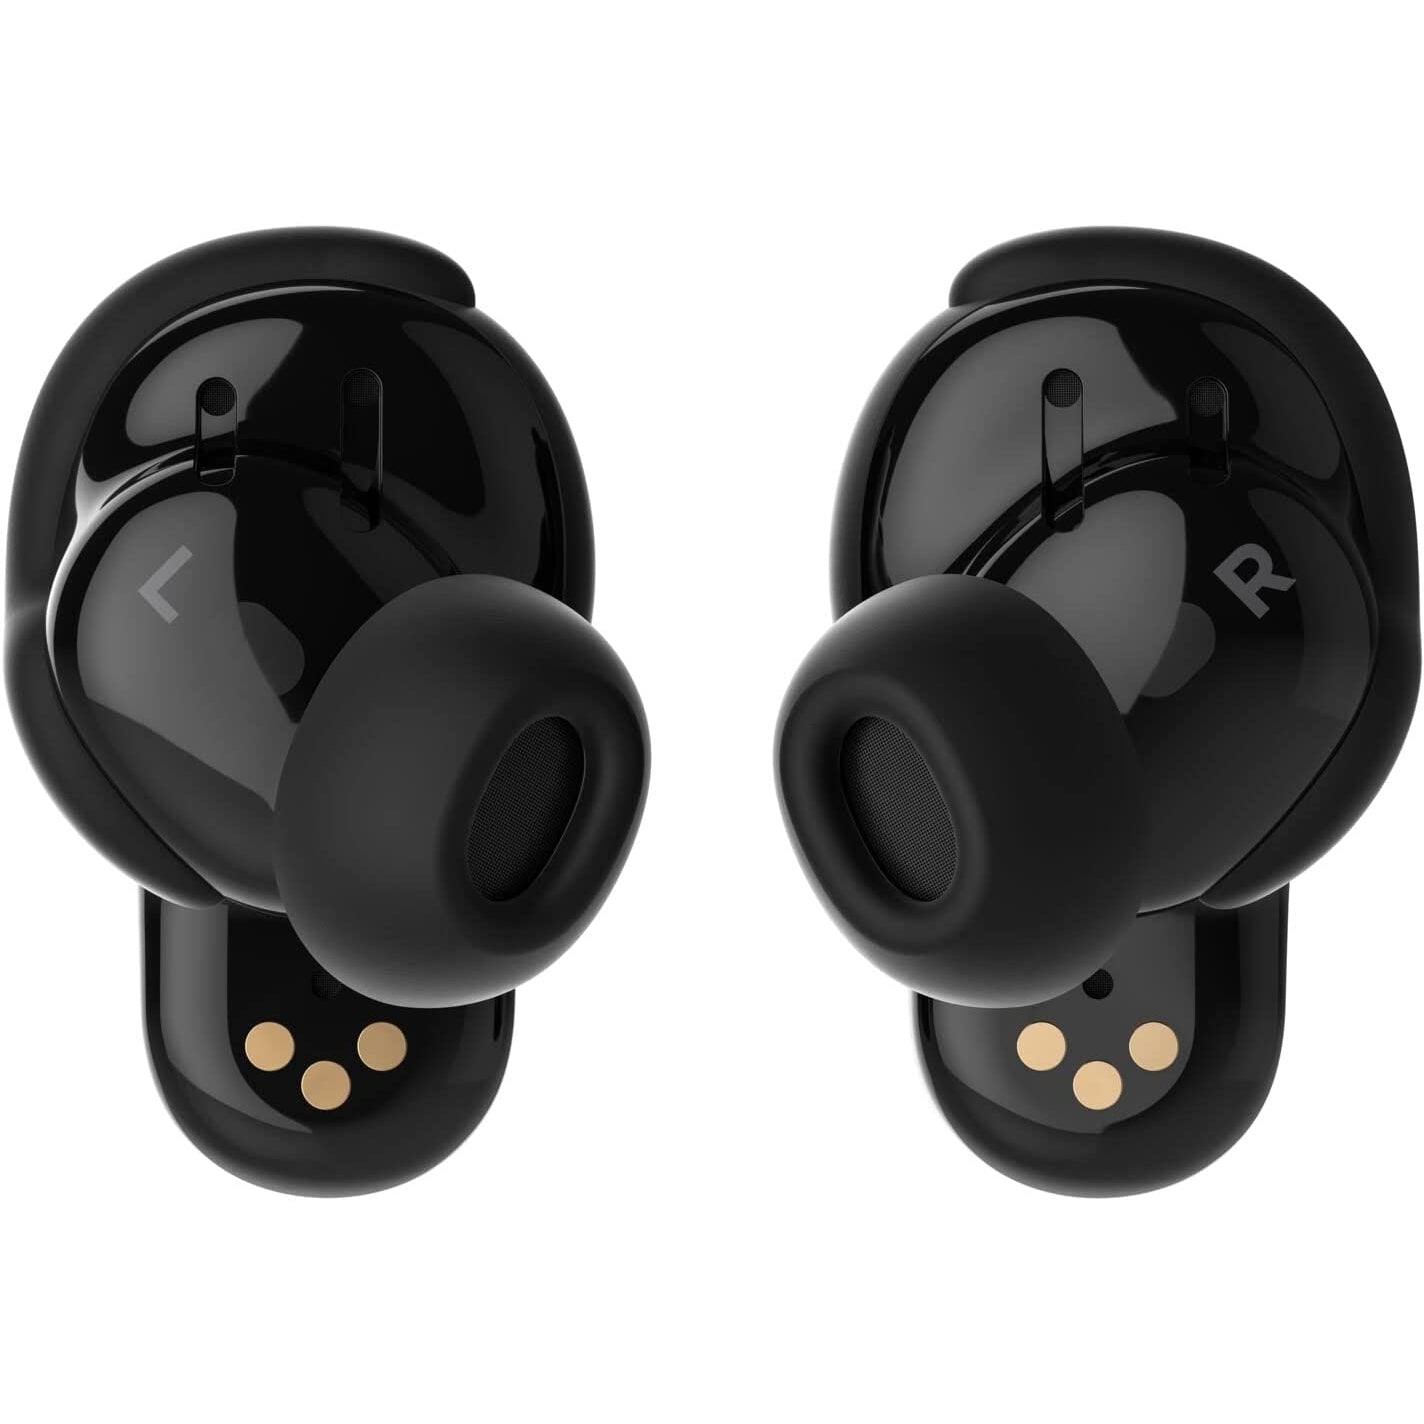 Bose QuietComfort II Wireless Bluetooth Noise-Cancelling Earbuds - Triple Black - Refurbished Pristine